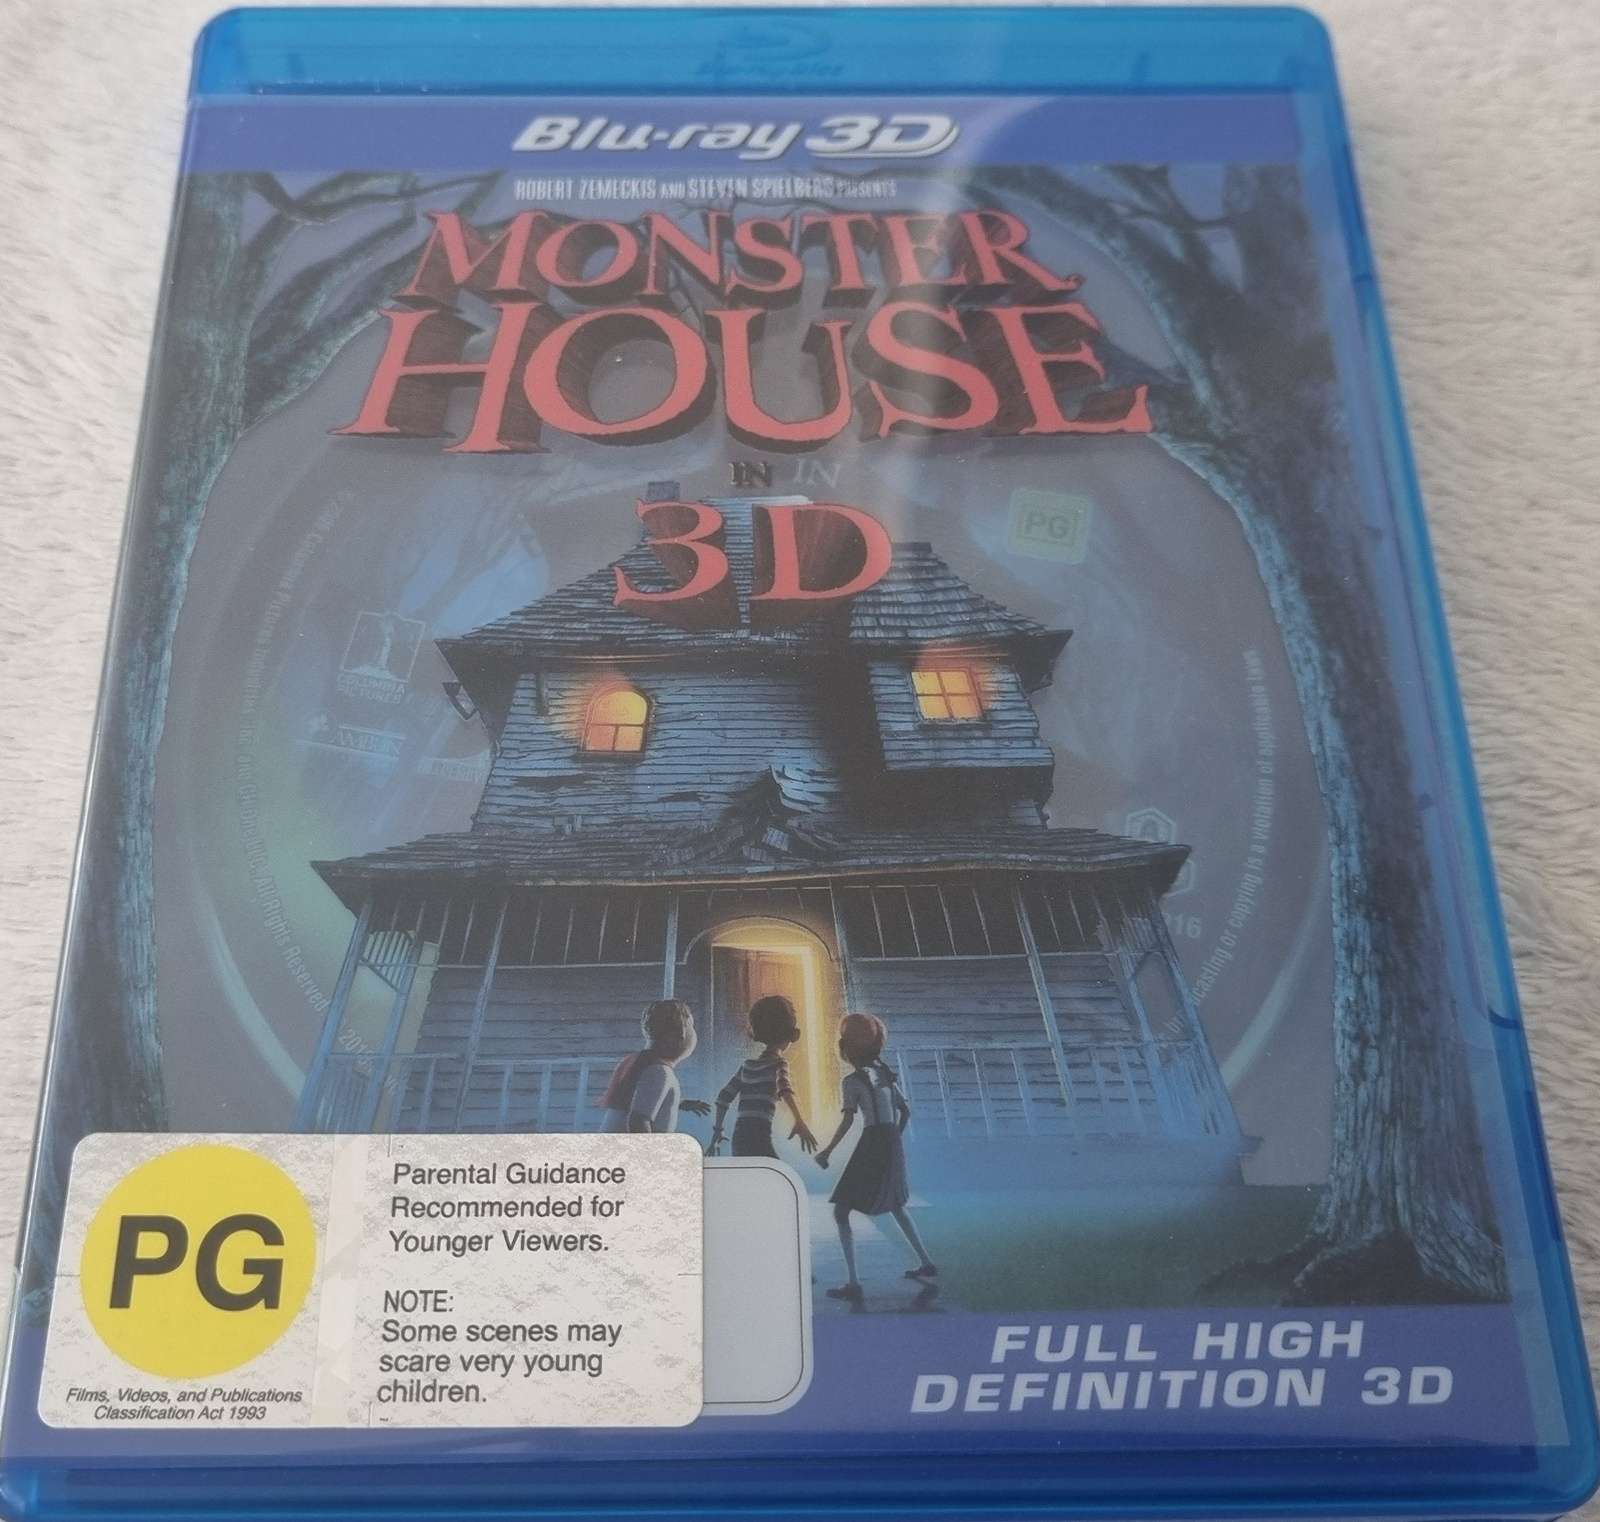 Monster House 3D + 2D (Blu Ray)